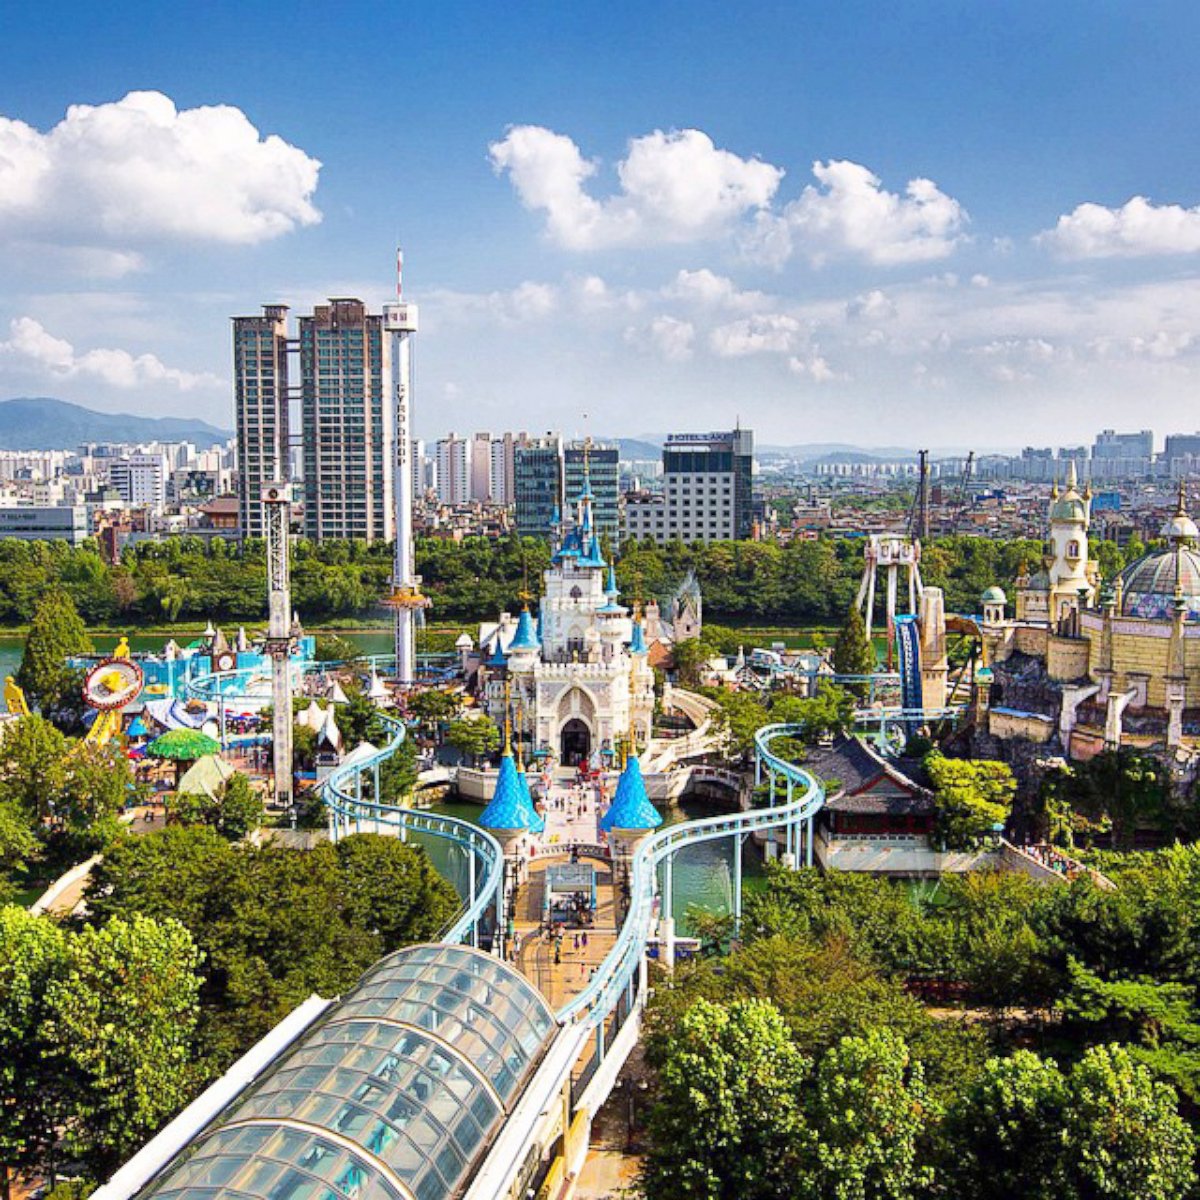 PHOTO: Lotteworld Theme Park in Seoul, South Korea.